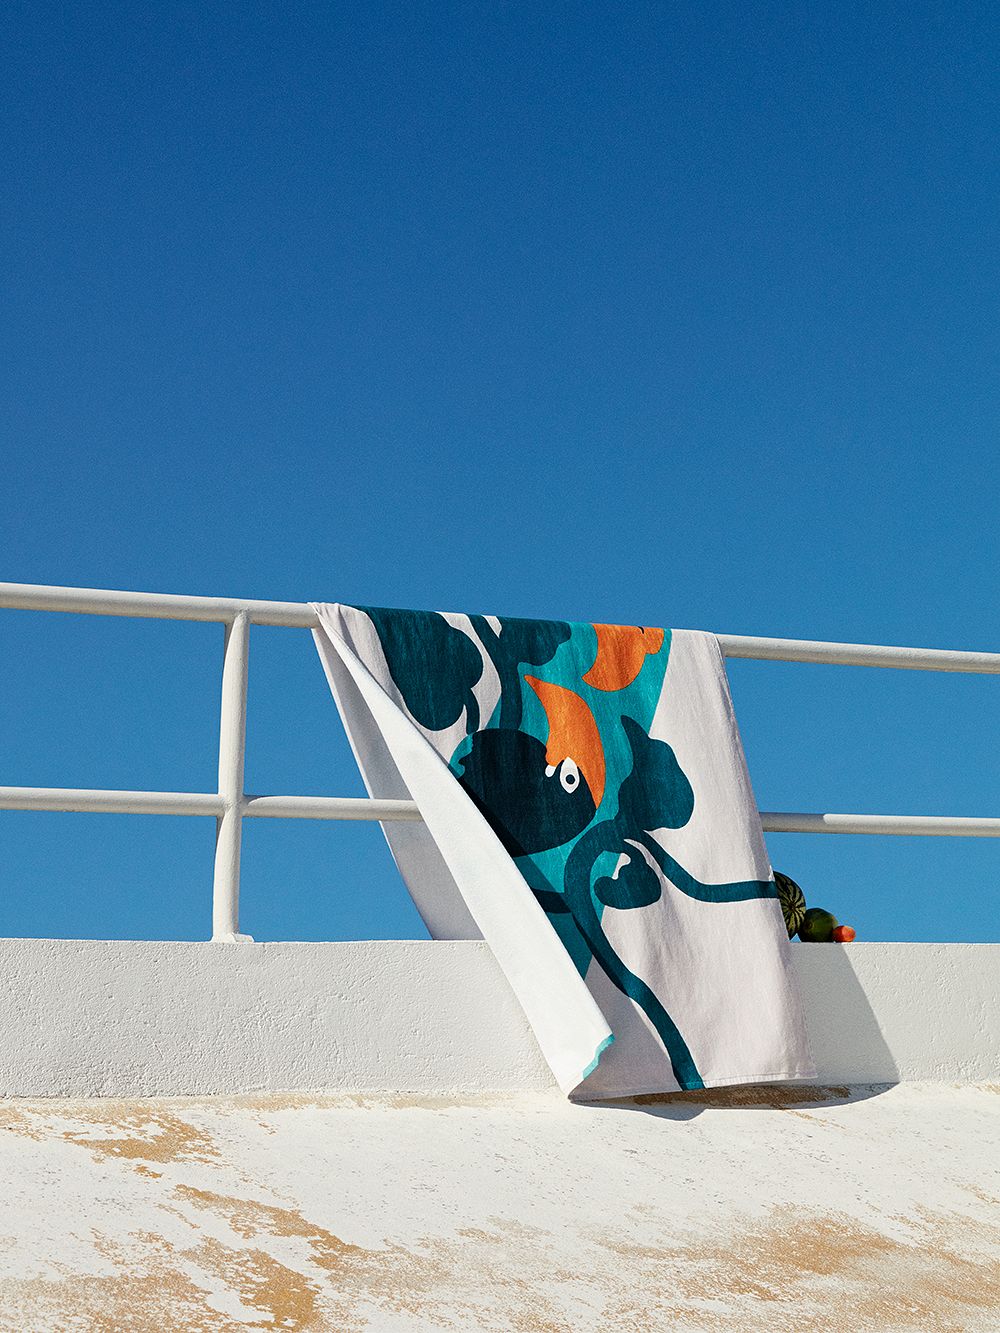 An image of a beach towel with Marimekko's Pepe print.